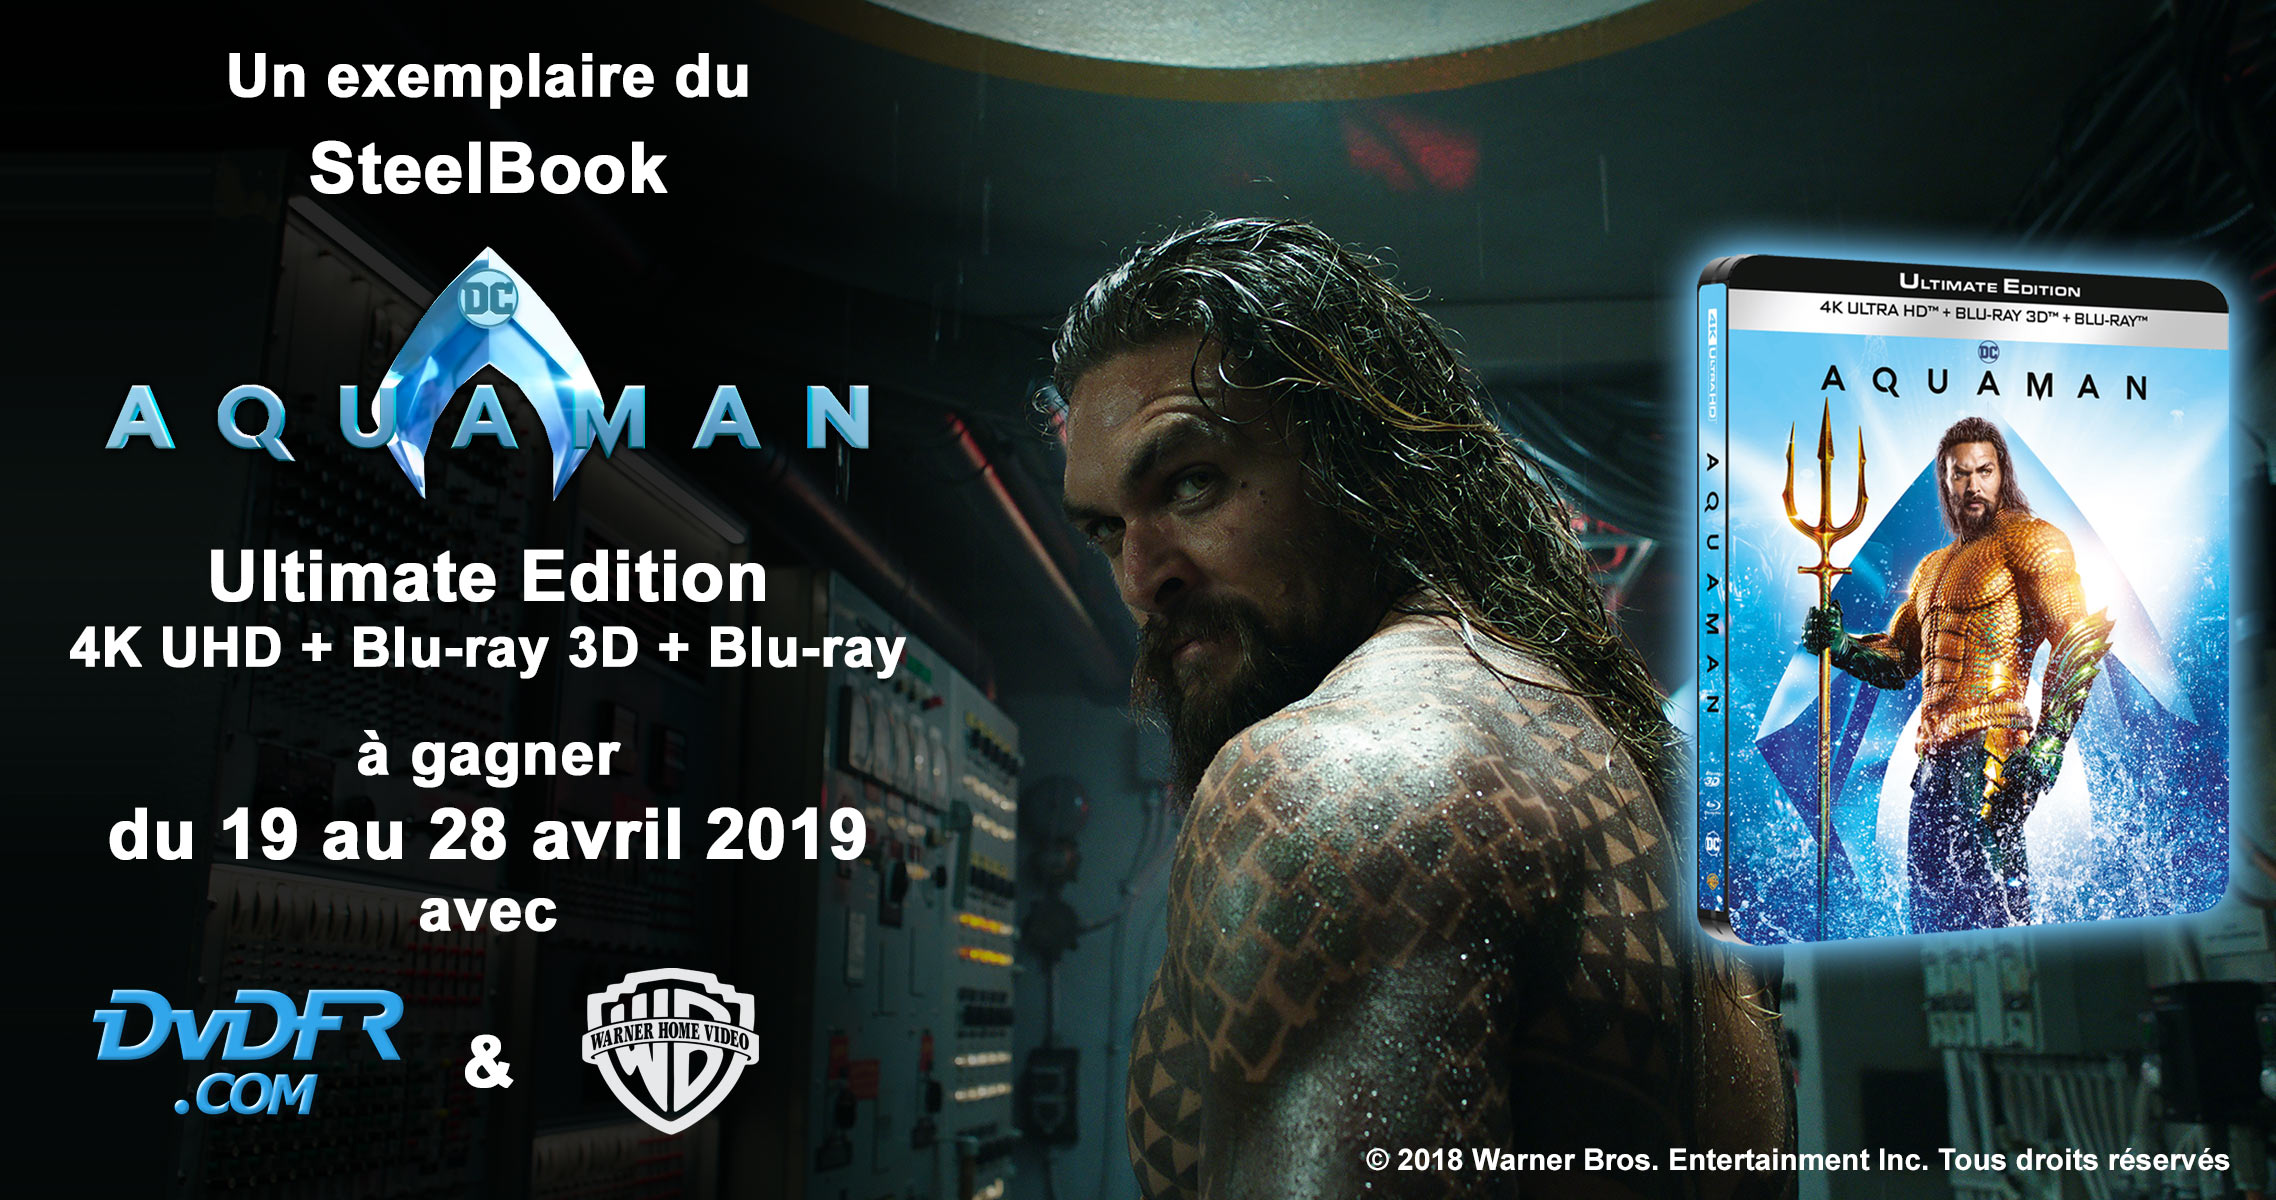 Concours Aquaman SteelBook 4K Ultra HD + Blu-ray 3D + Blu-ray 2D